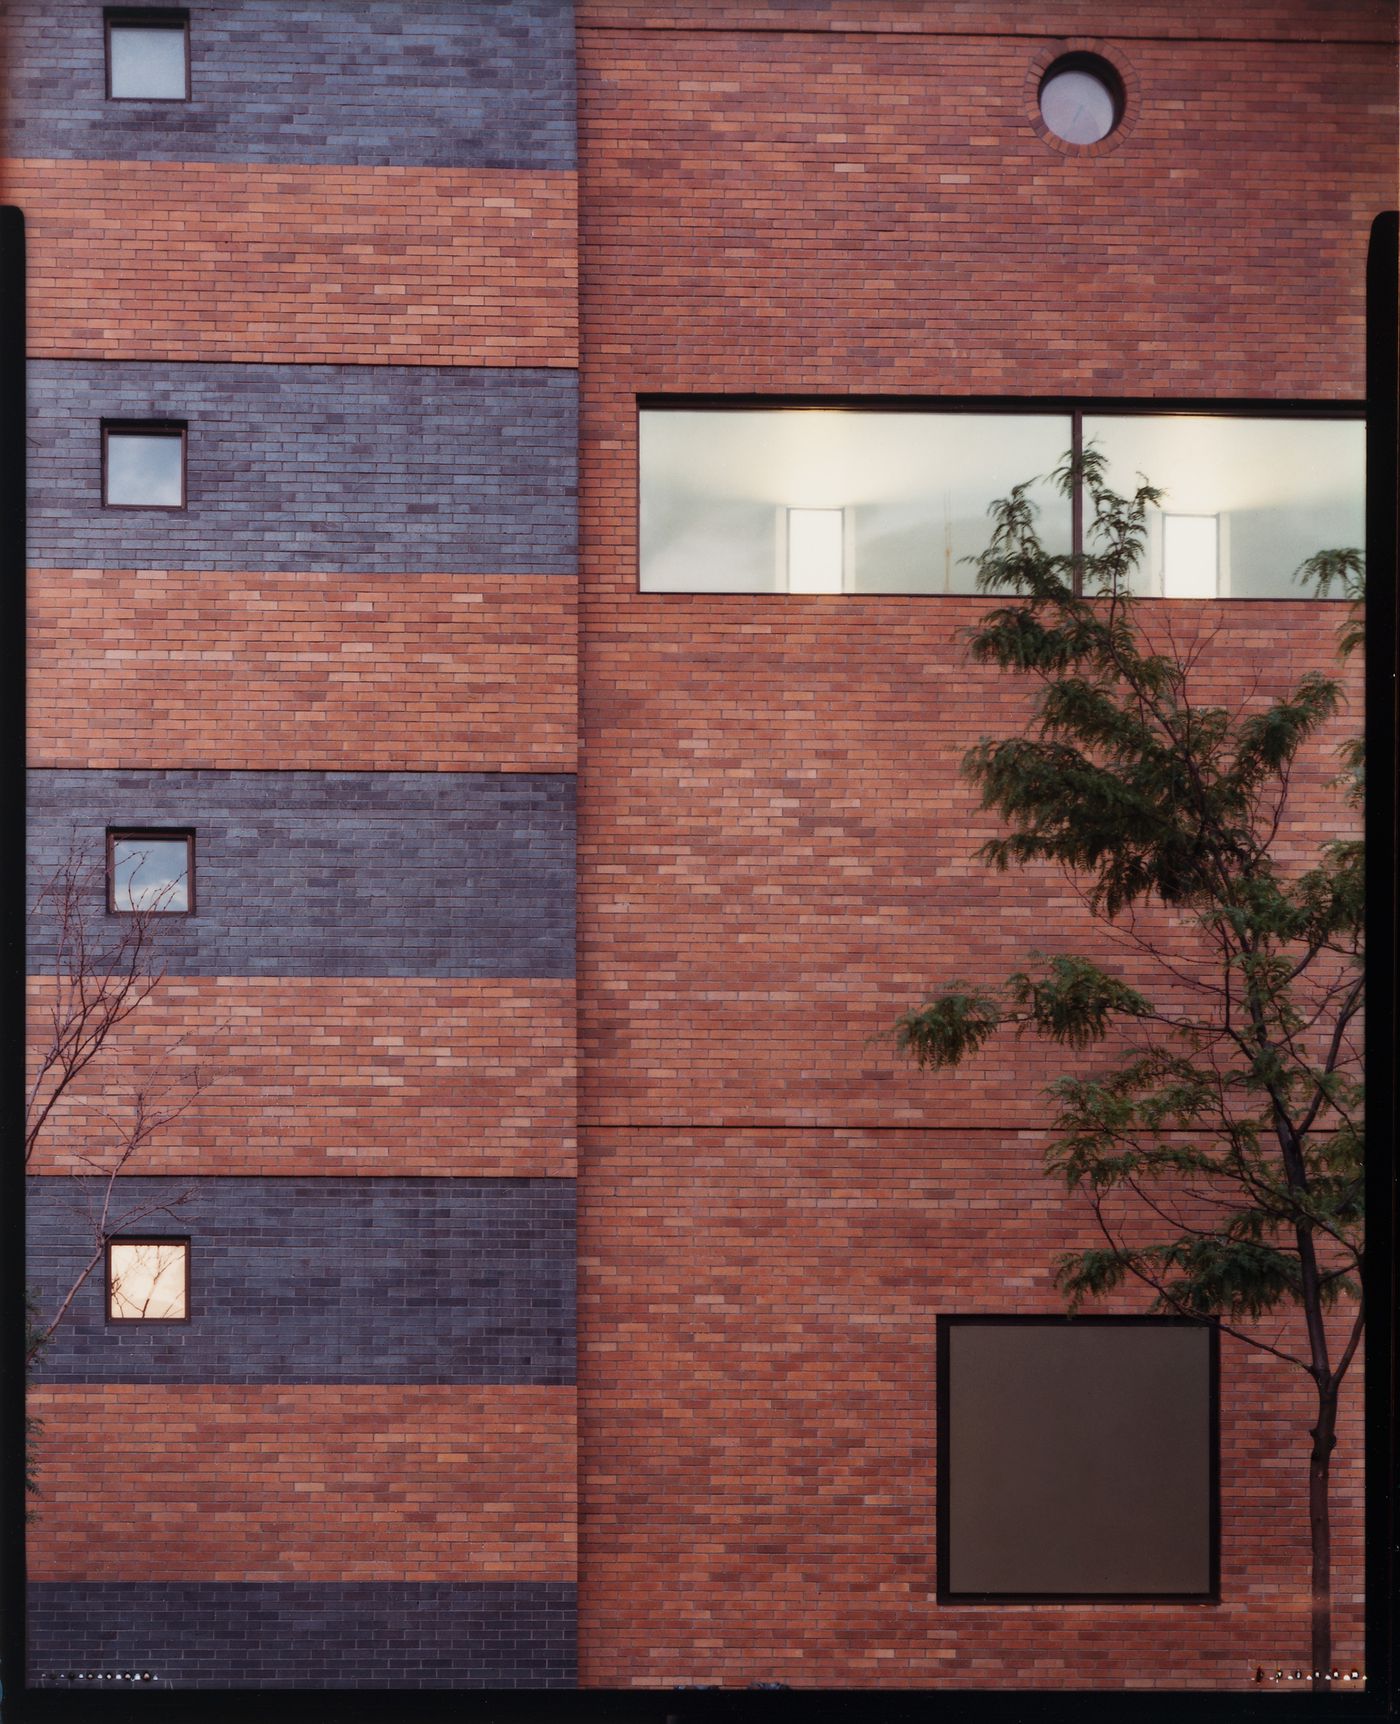 Arthur M. Sackler Museum, Harvard University, Cambridge, Massachusetts: three views of the facade